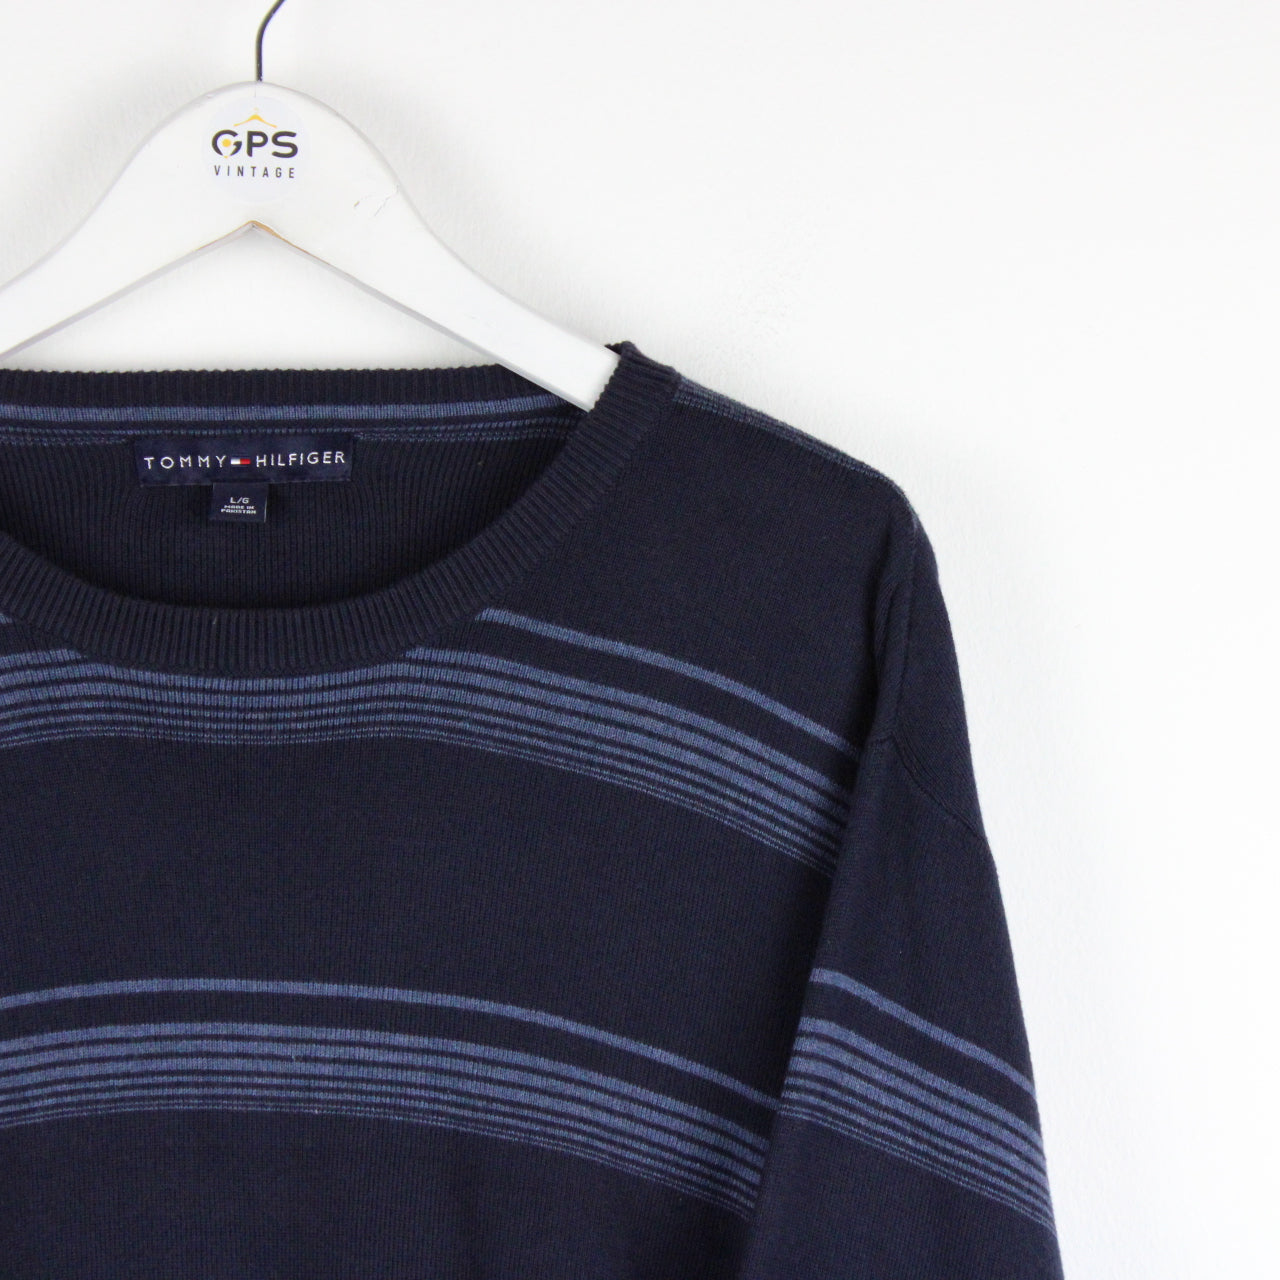 TOMMY HILFIGER Knit Sweatshirt Navy Blue | Large